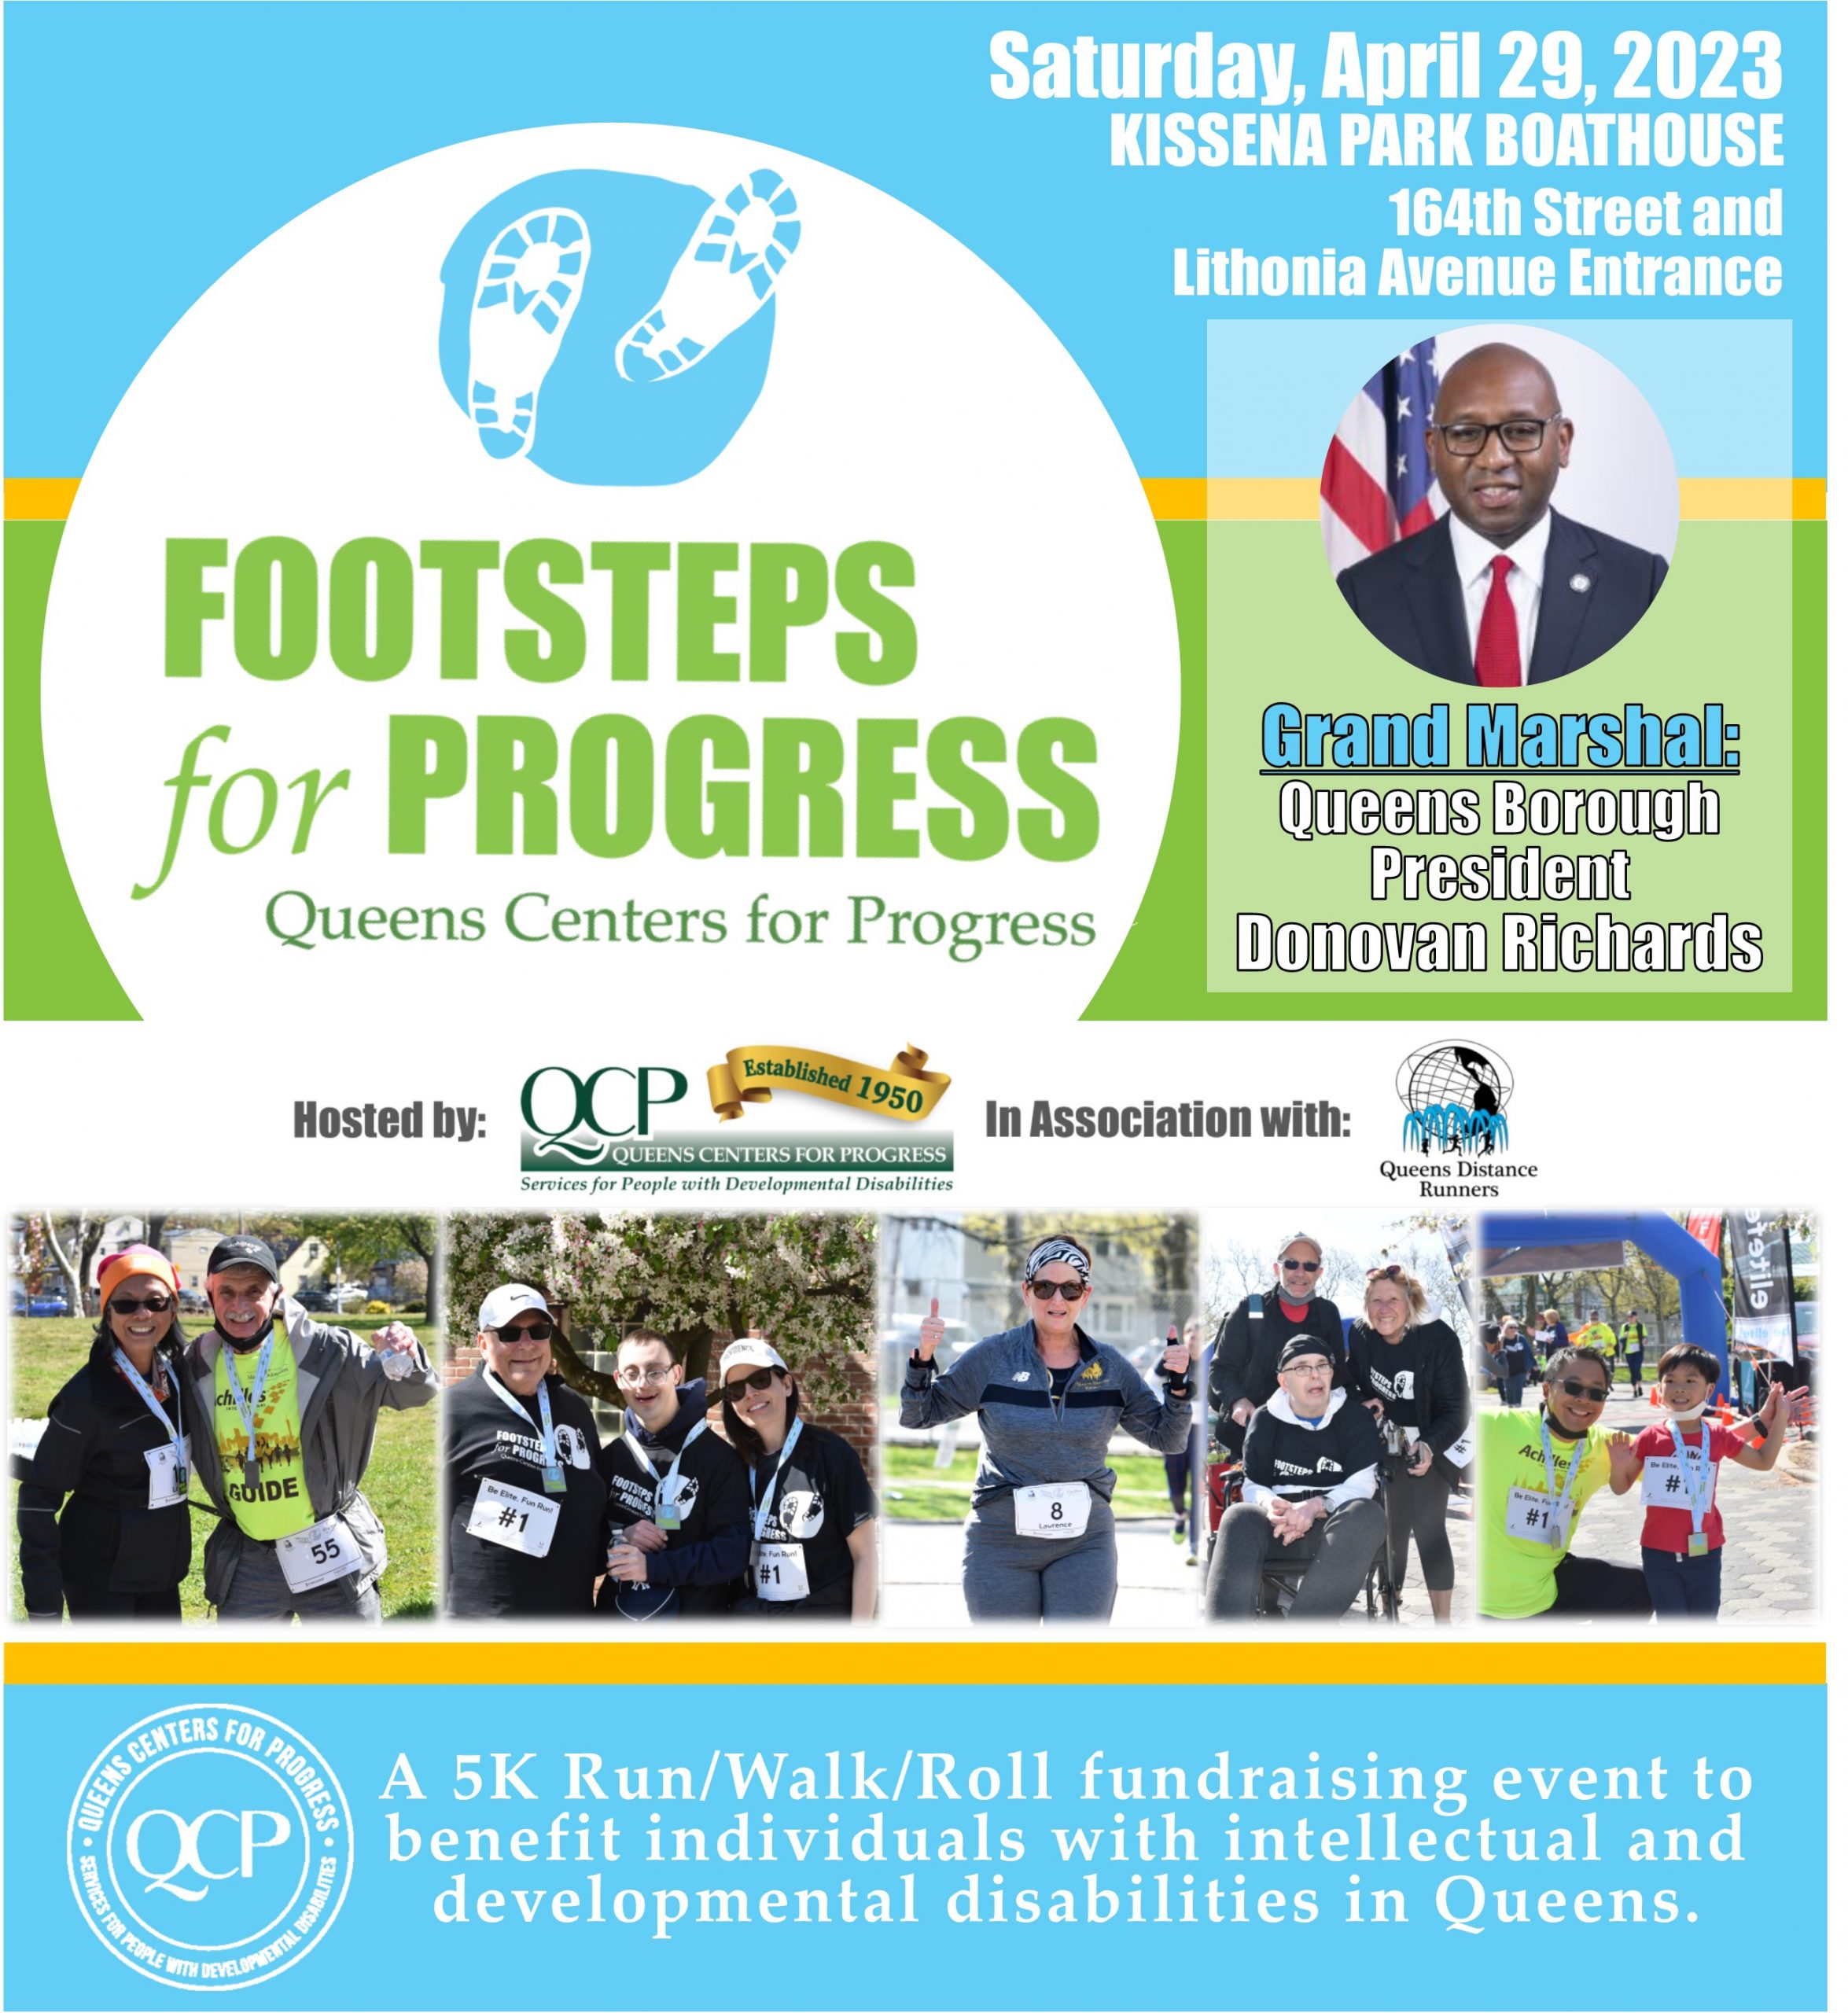 QCP Footsteps for Progress 5K Run/Walk/Roll @ Kissena Park